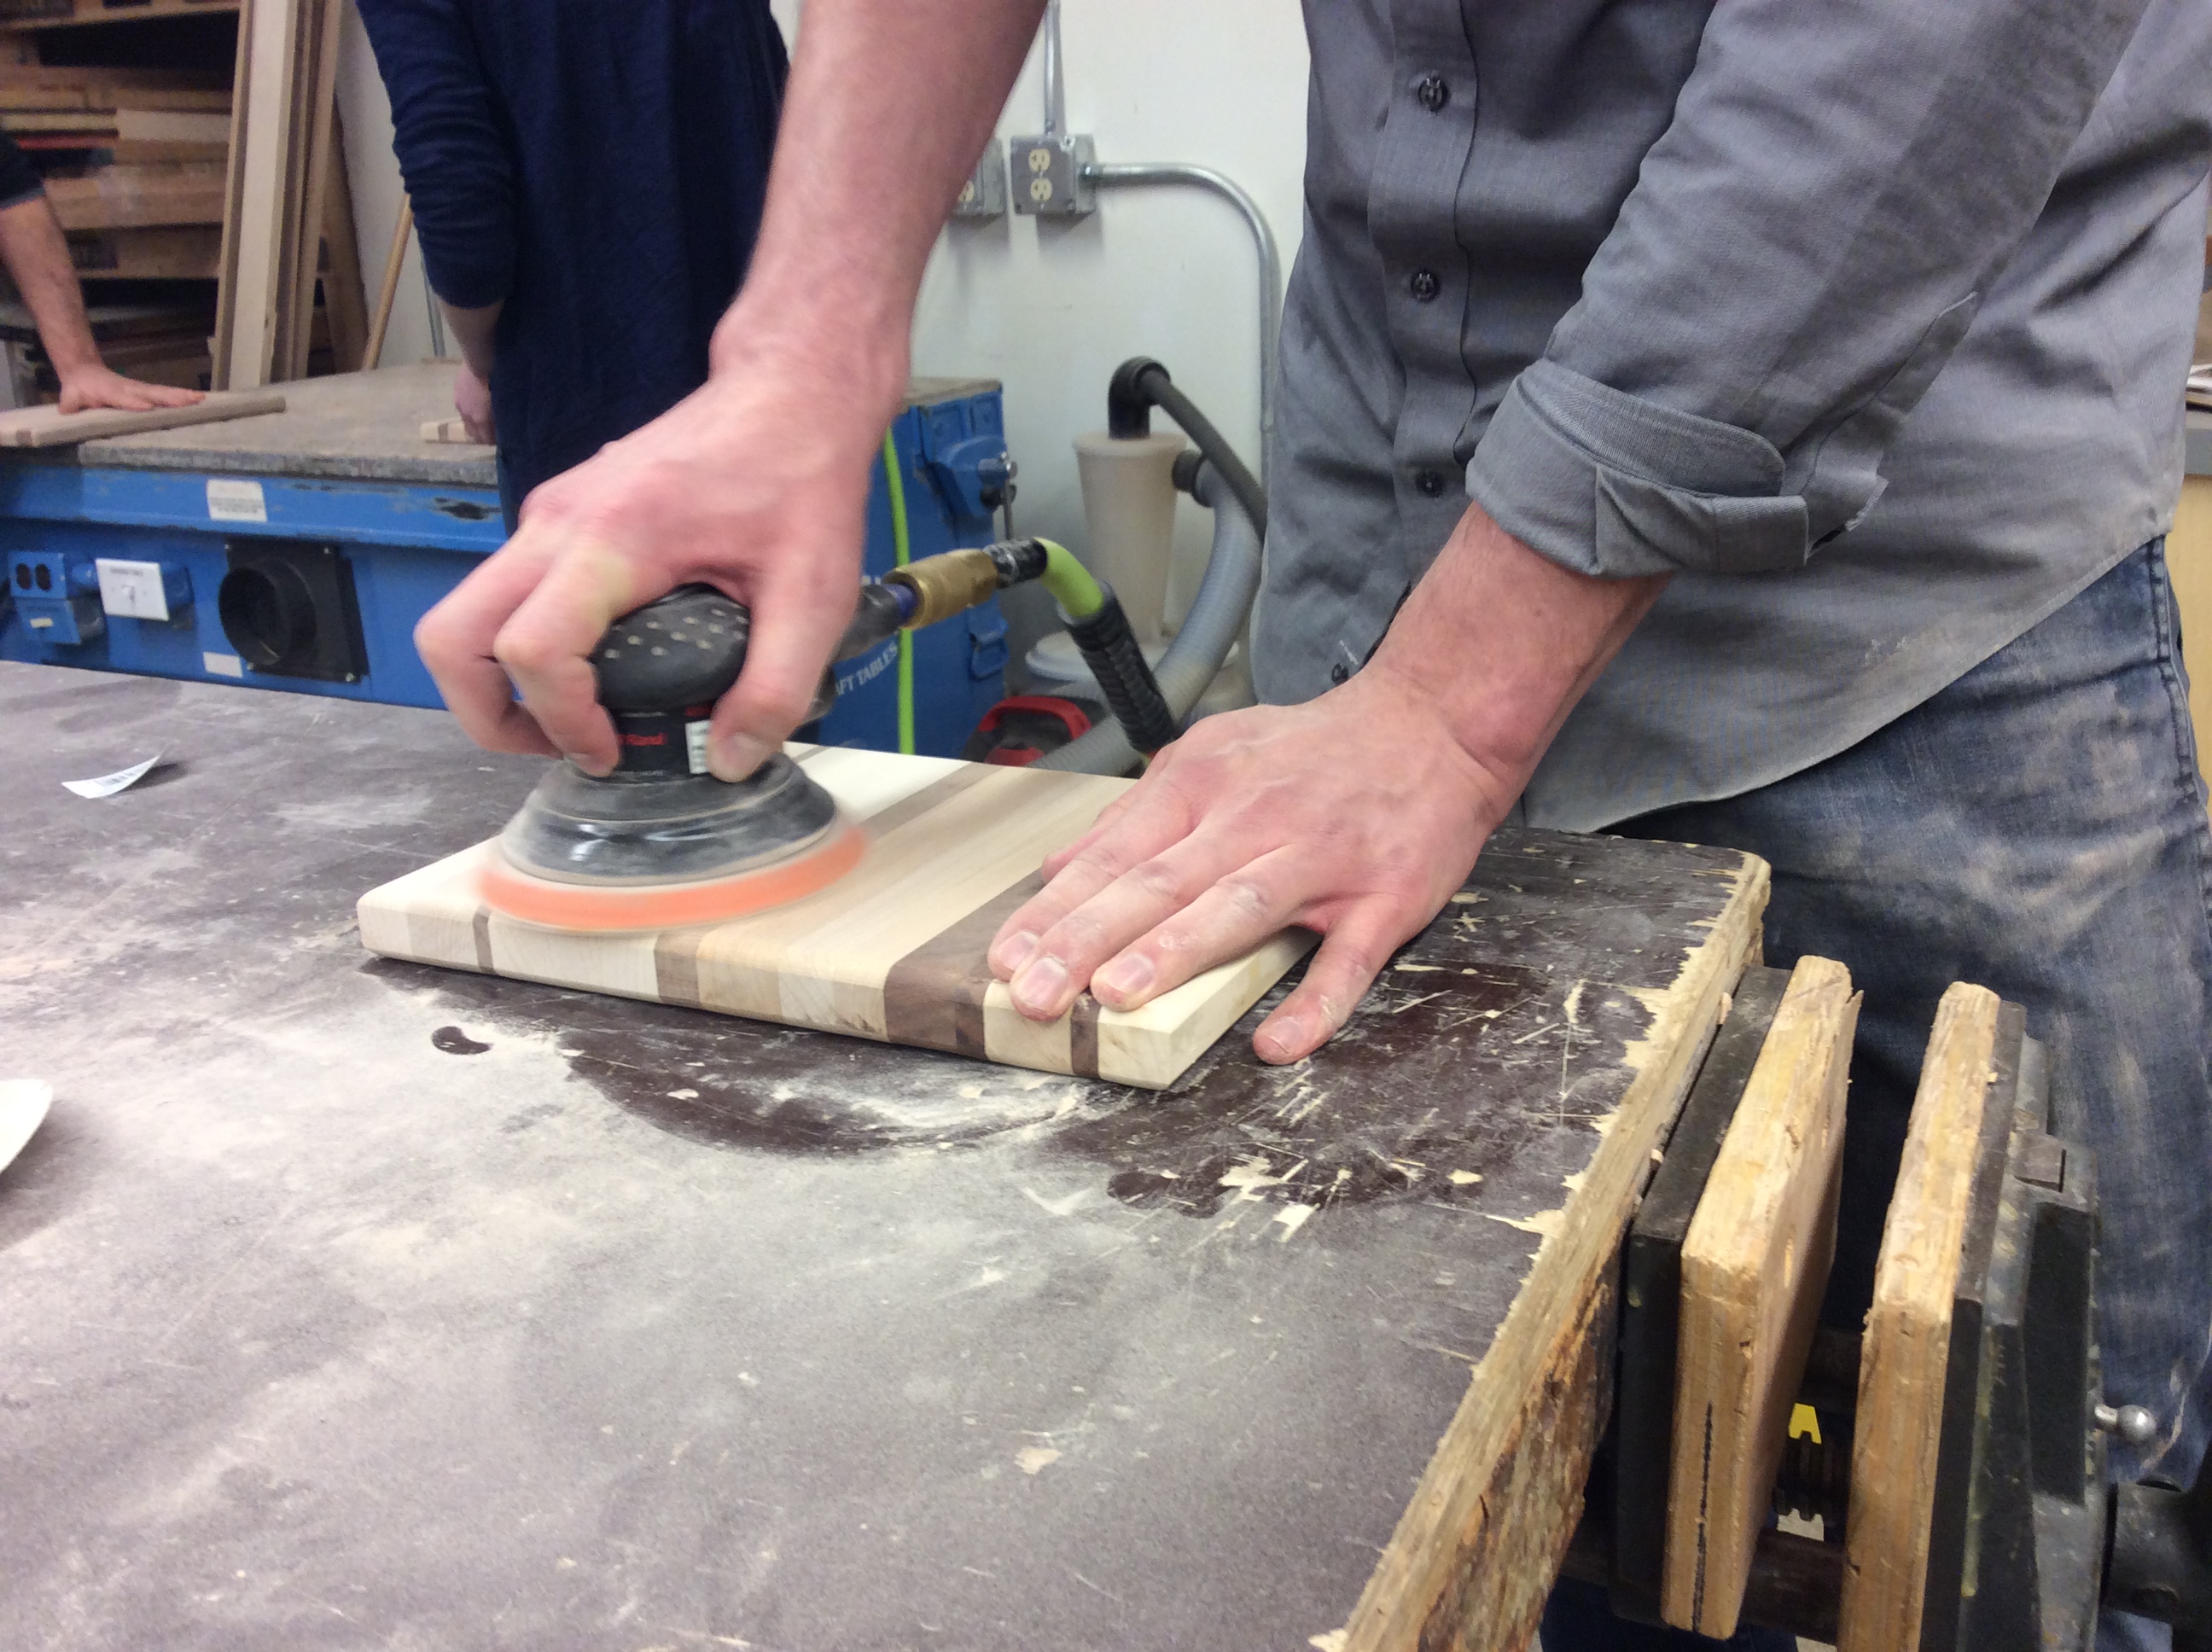 Person sanding a cutting board